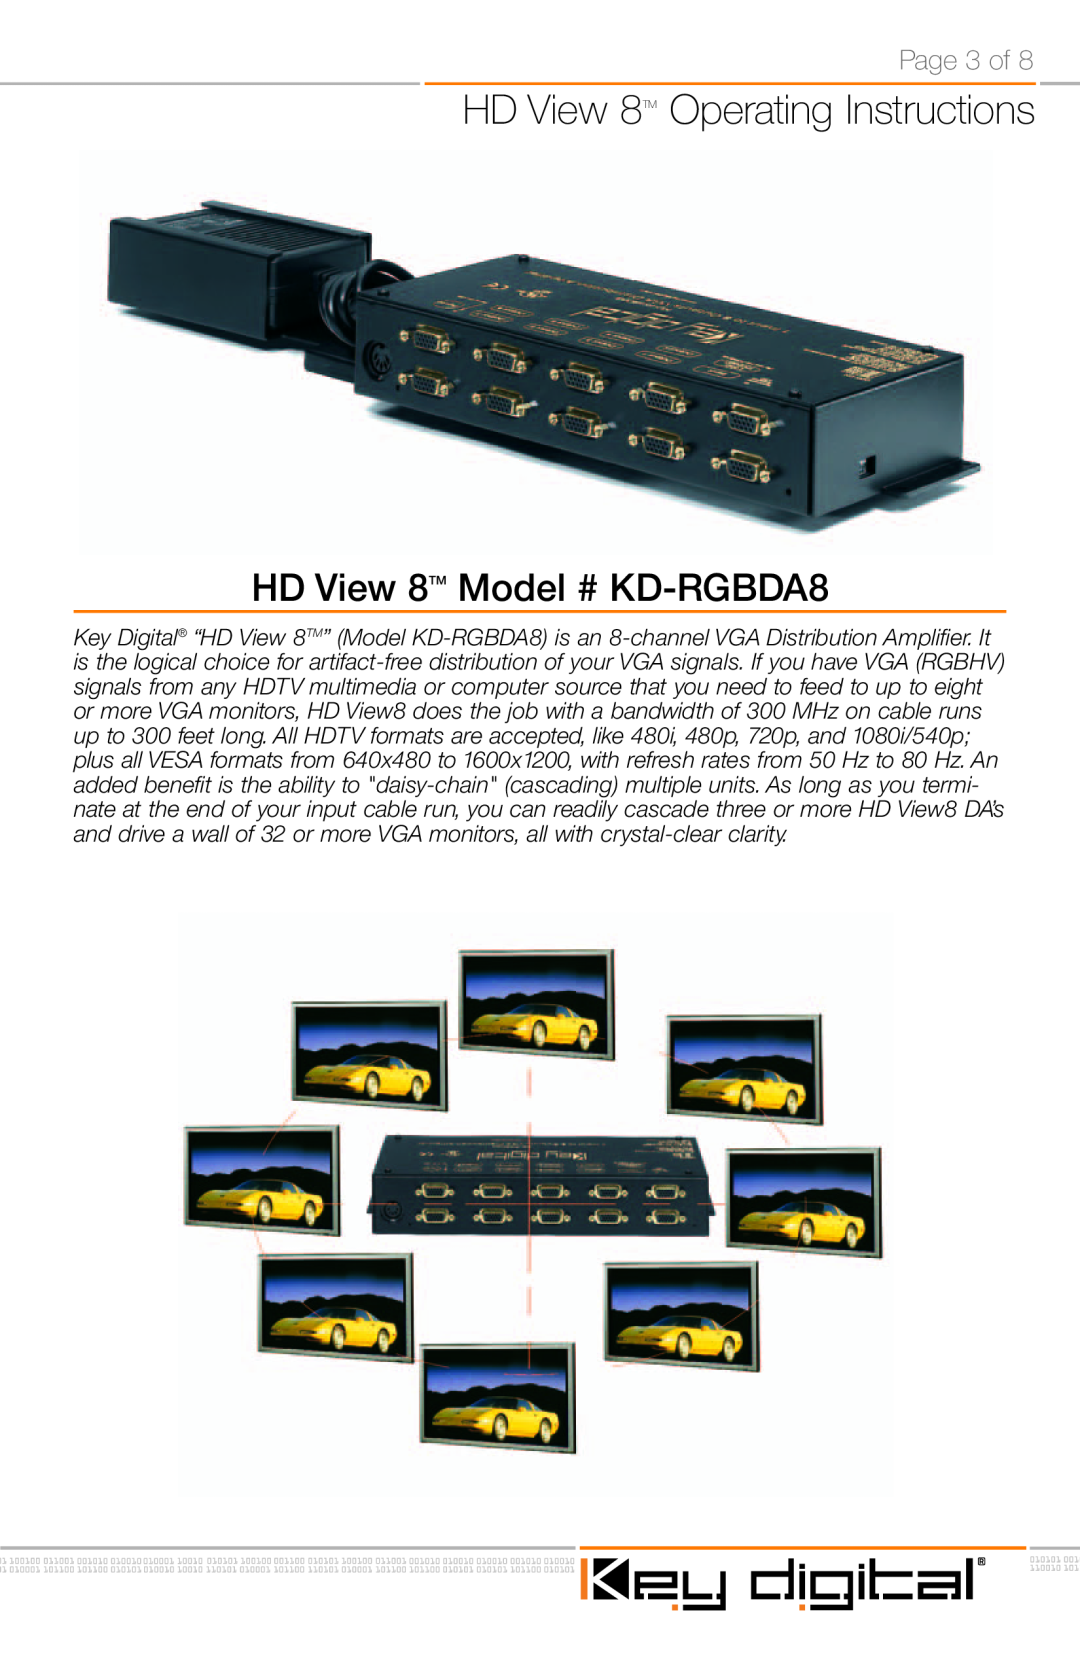 Key Digital manual Page 3 of, HD View 8TM Operating Instructions, HD View 8TM Model # KD-RGBDA8 